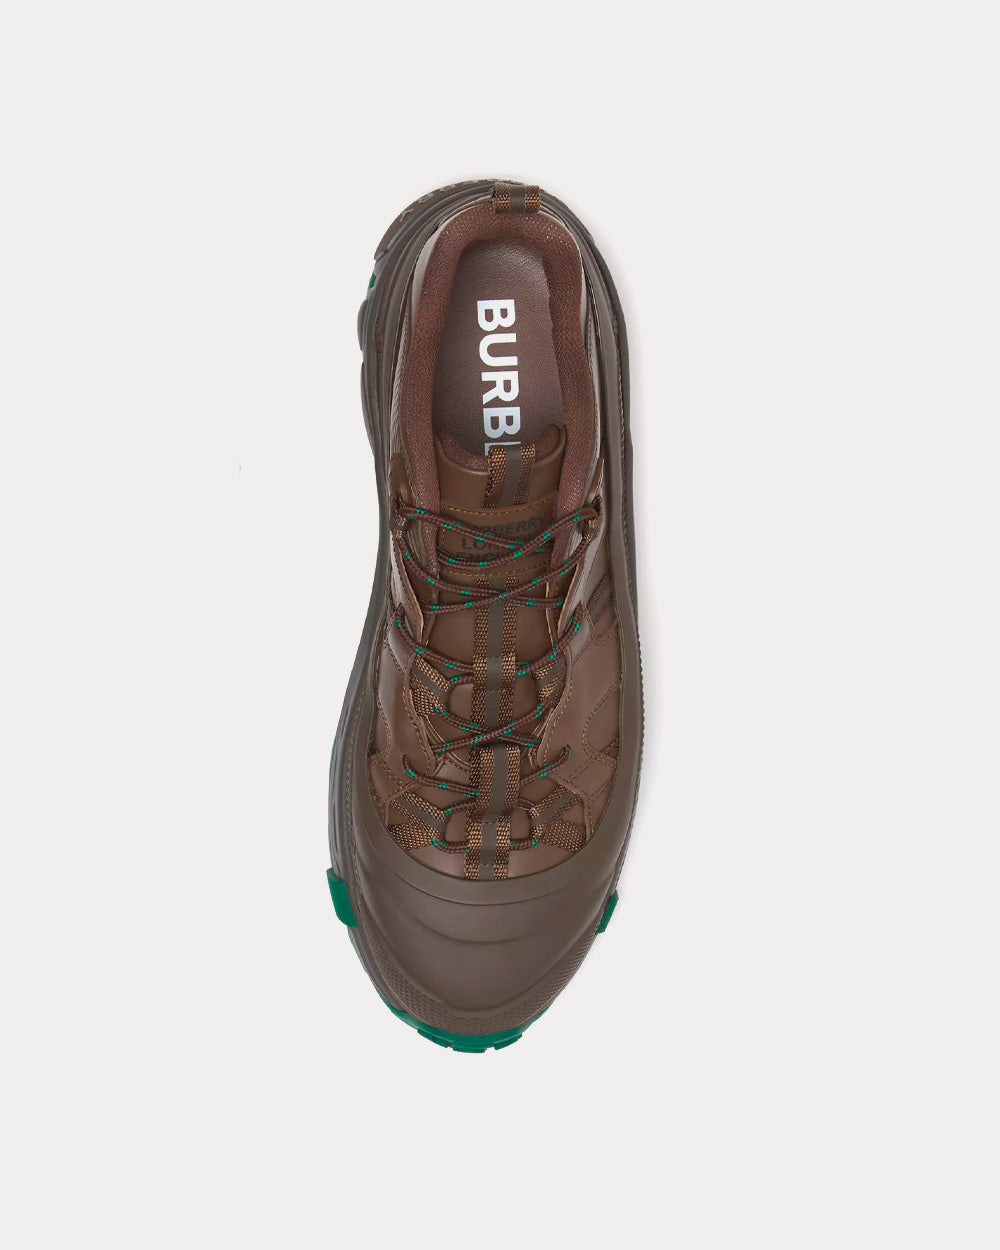 Burberry - Arthur Leather Dark Mocha / Green Low Top Sneakers